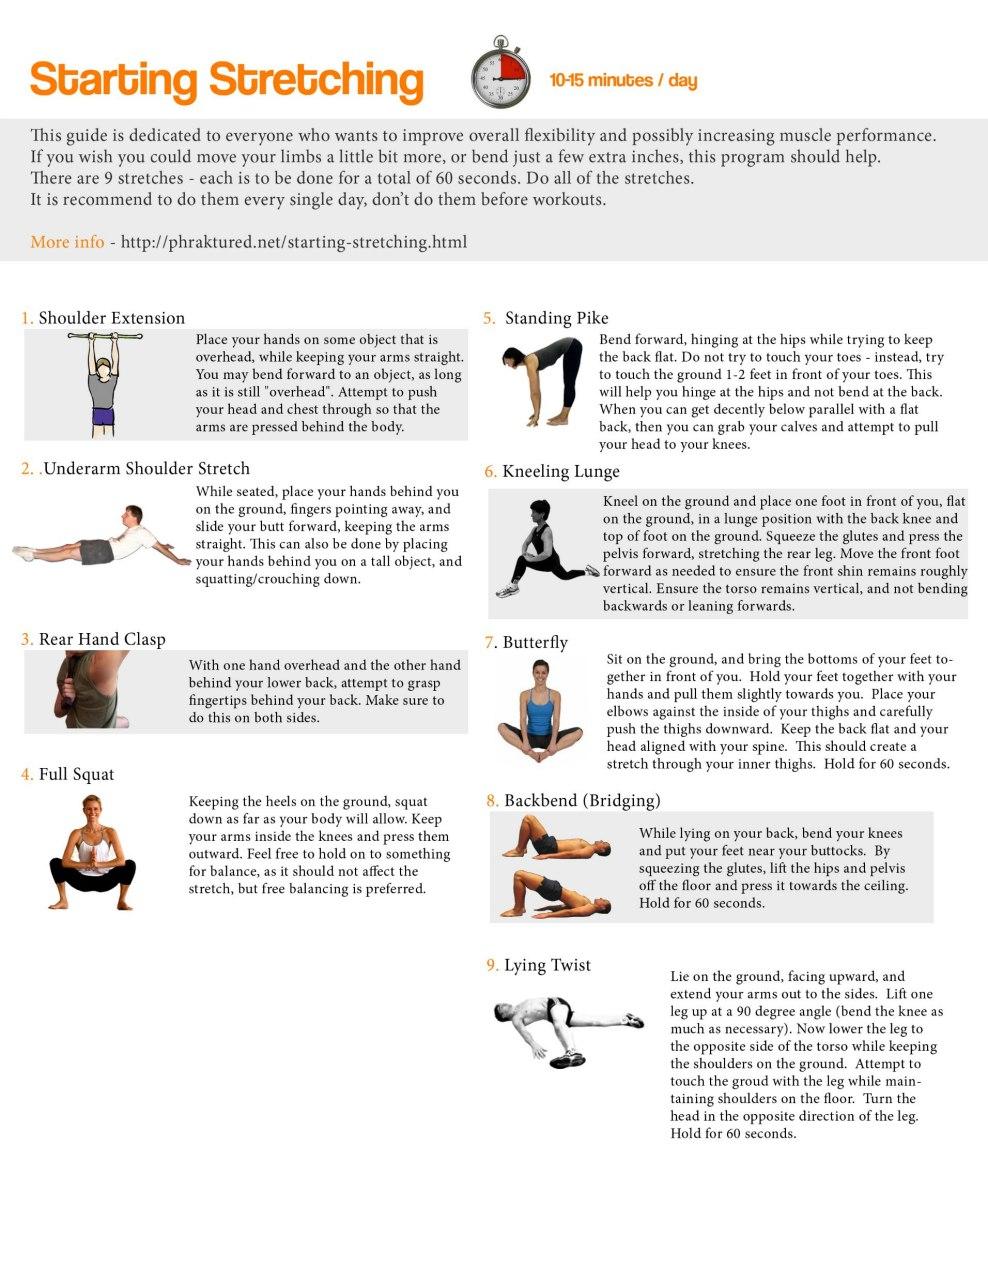 Starting Stretching infographic